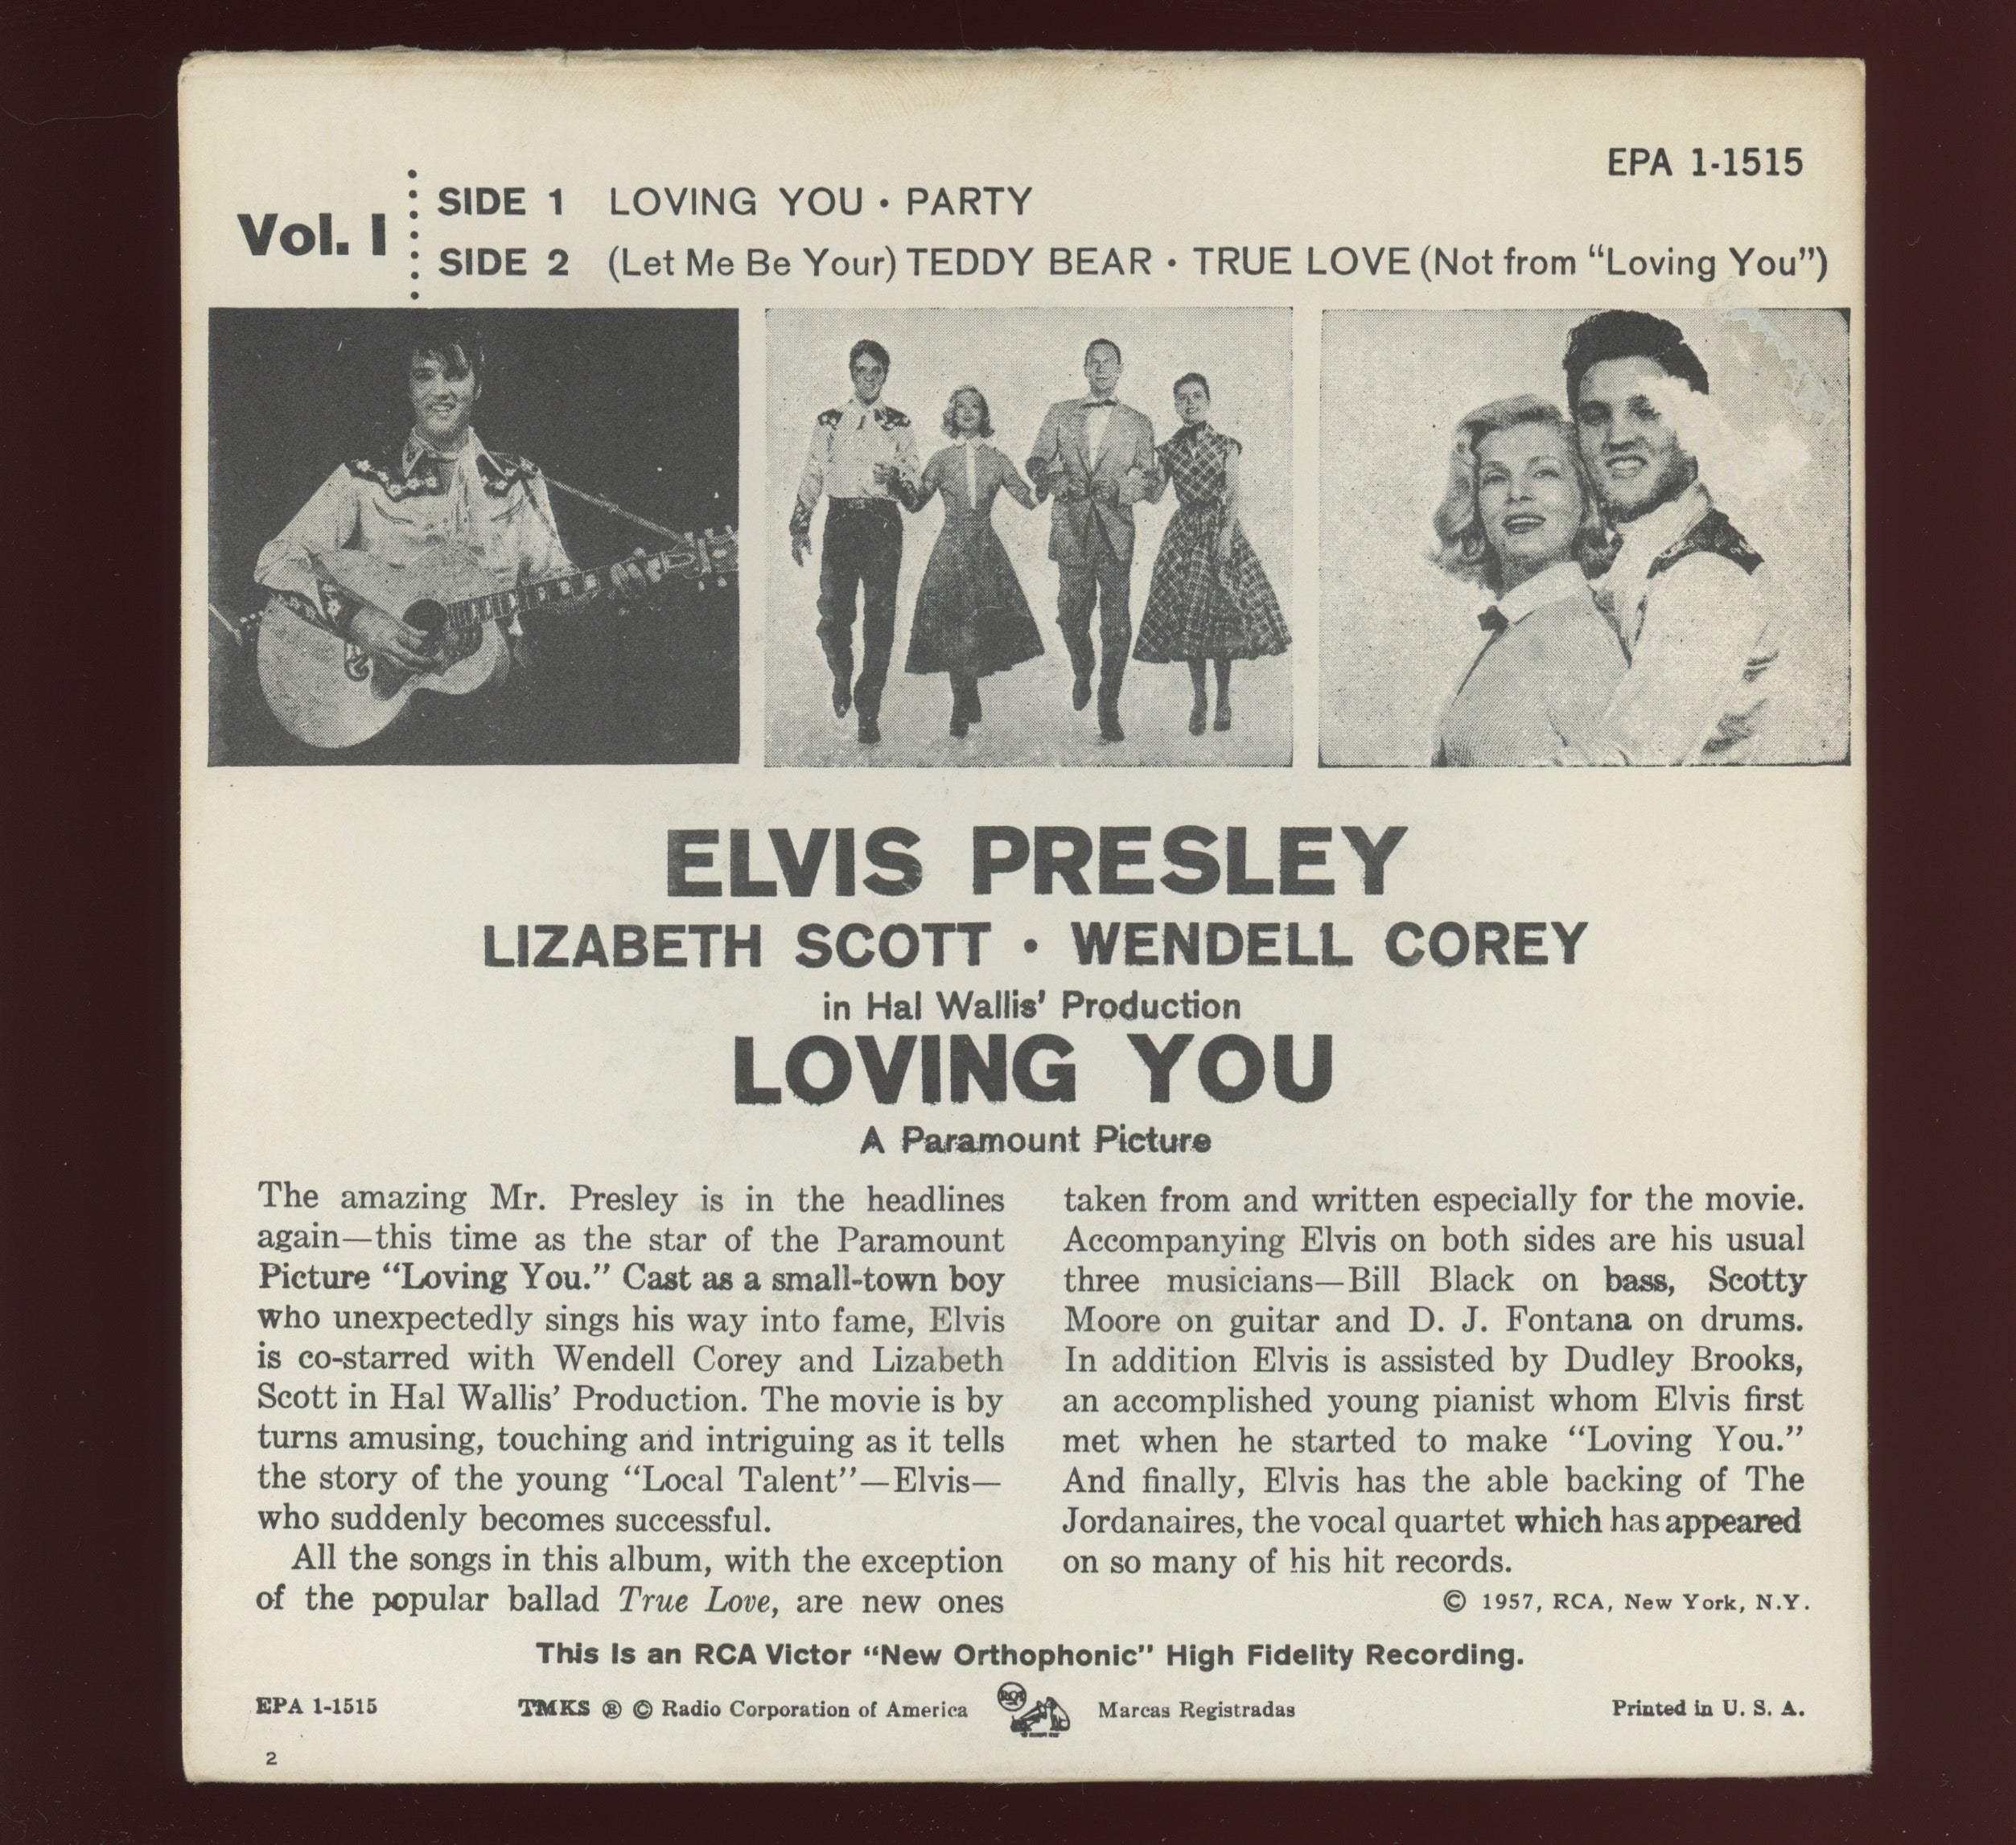 Elvis Presley - Loving You on RCA EPA 1515 Rare Orange Label 45 EP With Cover